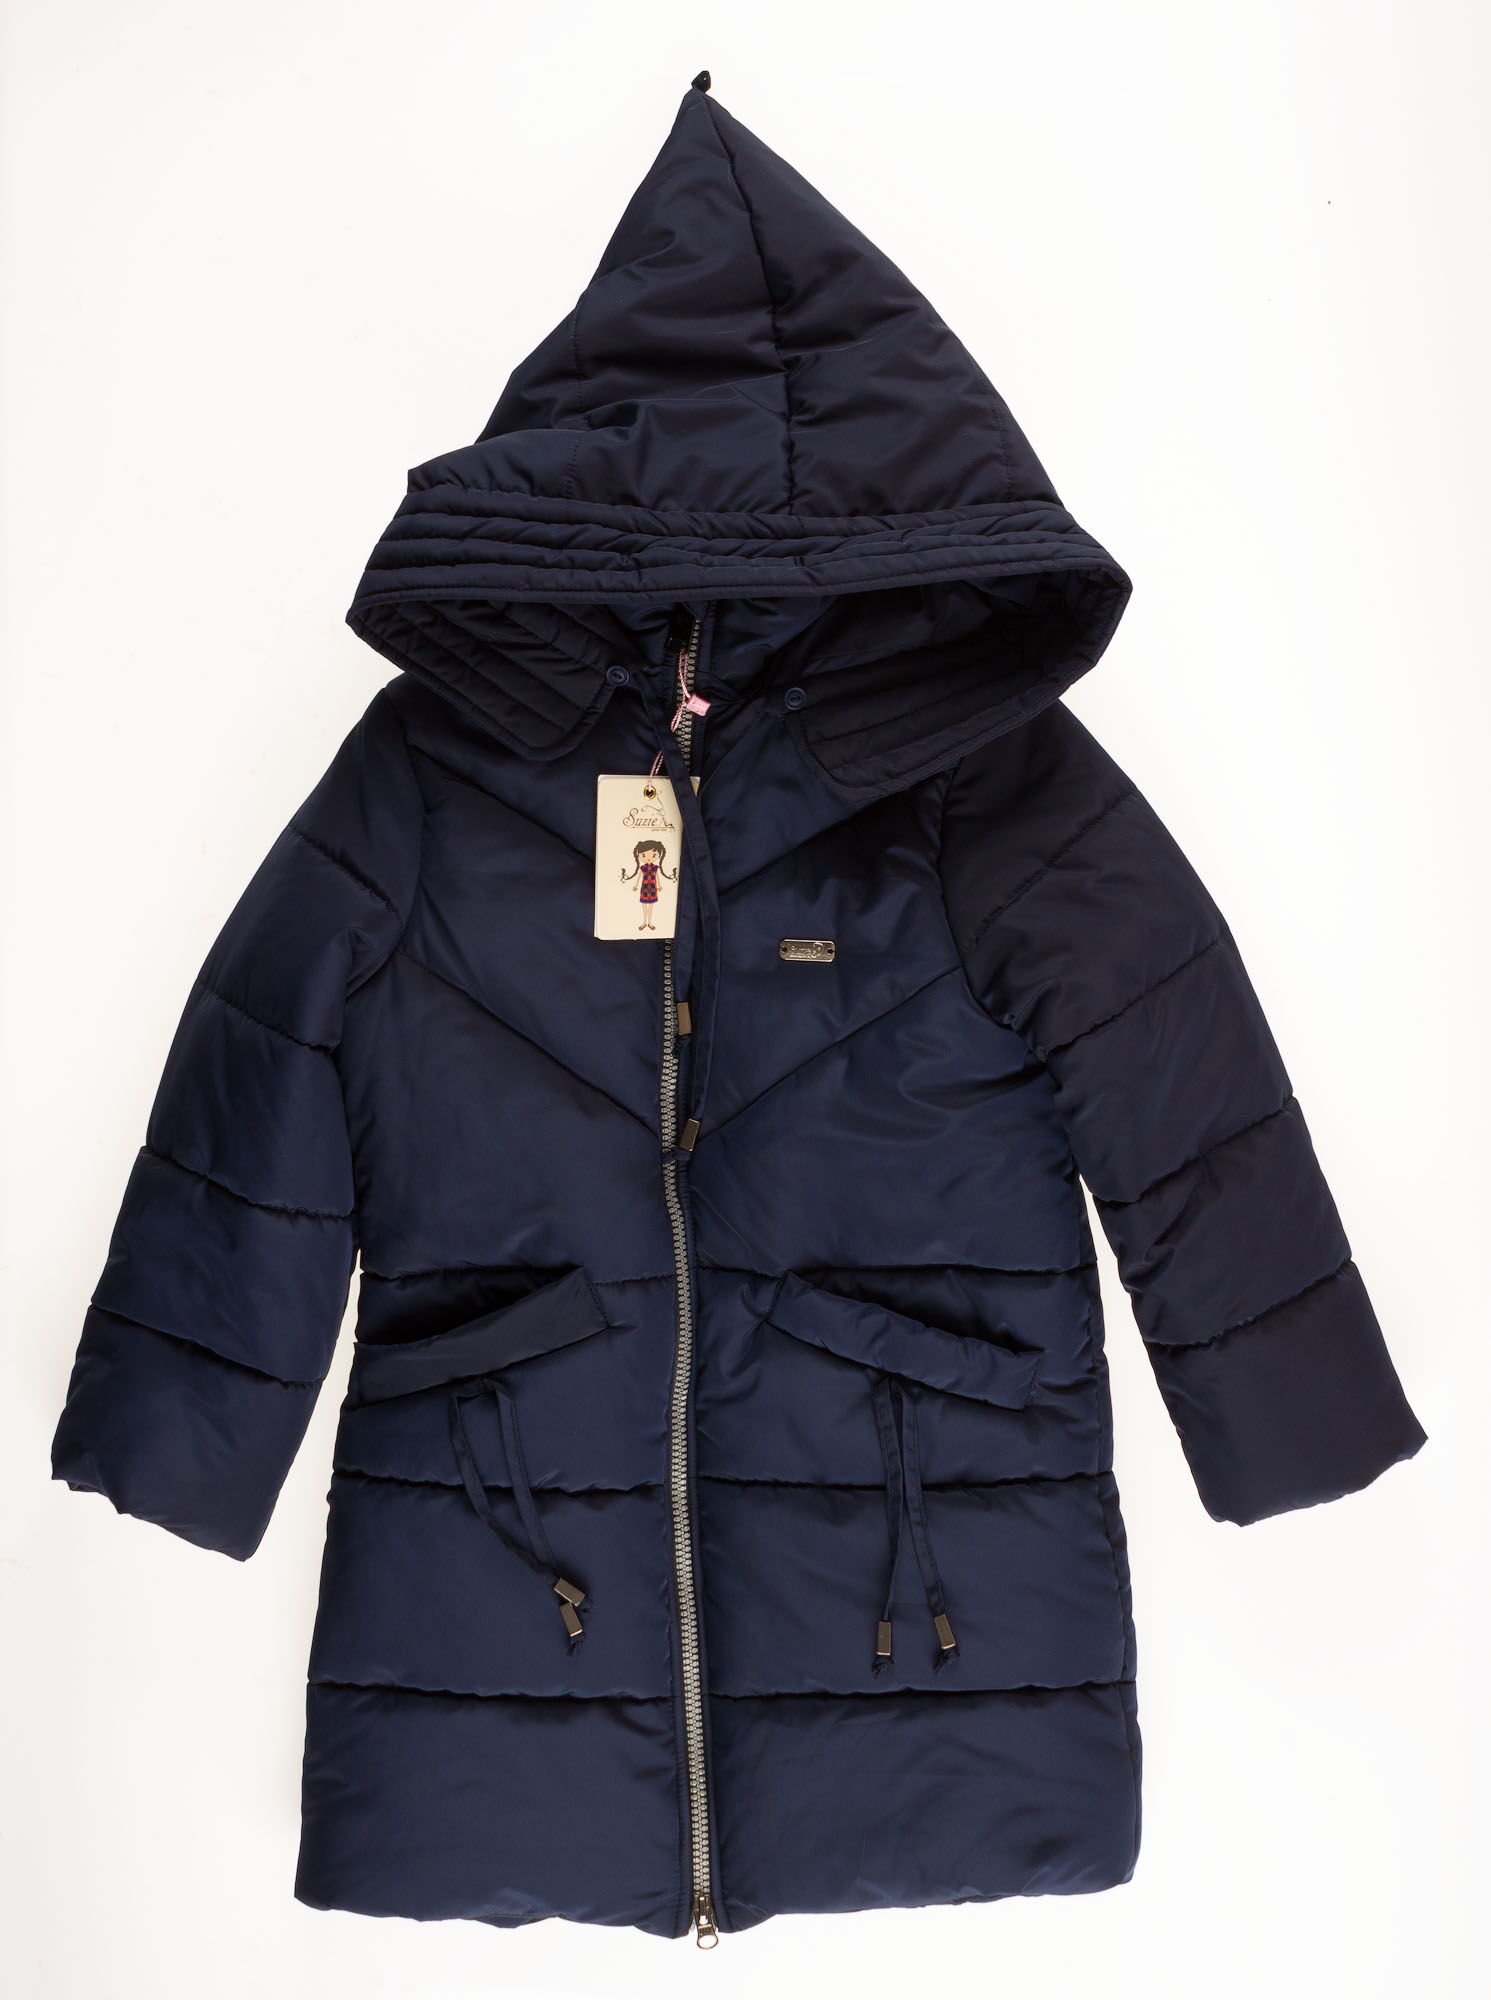 Куртка зимняя для девочки SUZIE Тинки темно-синяя ПТ-44711 - купить